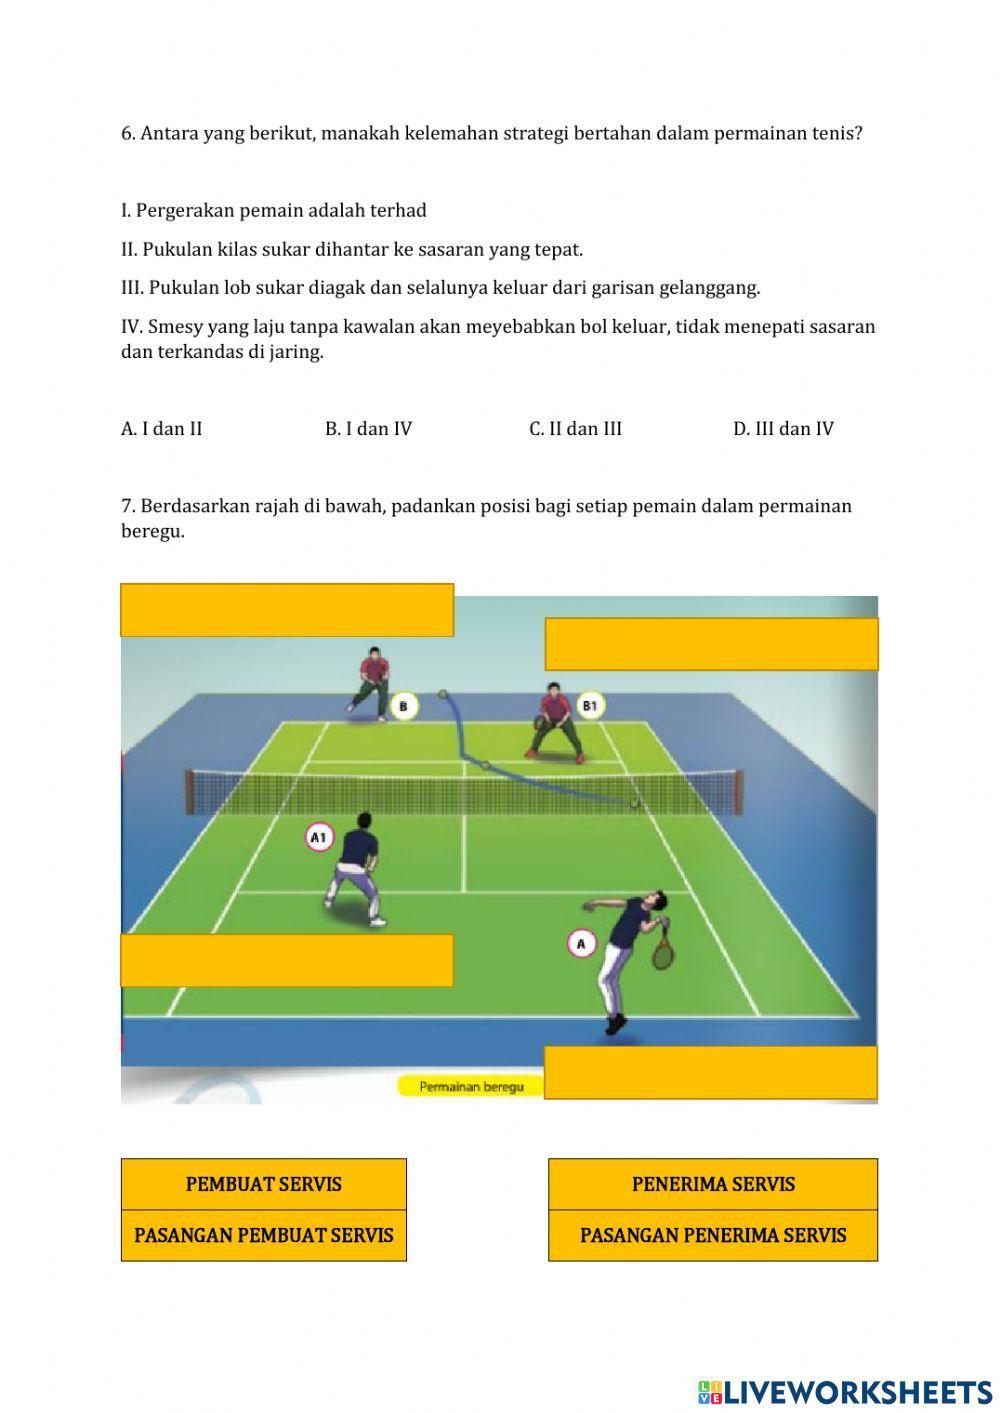 Permainan kategori jaring (tenis)